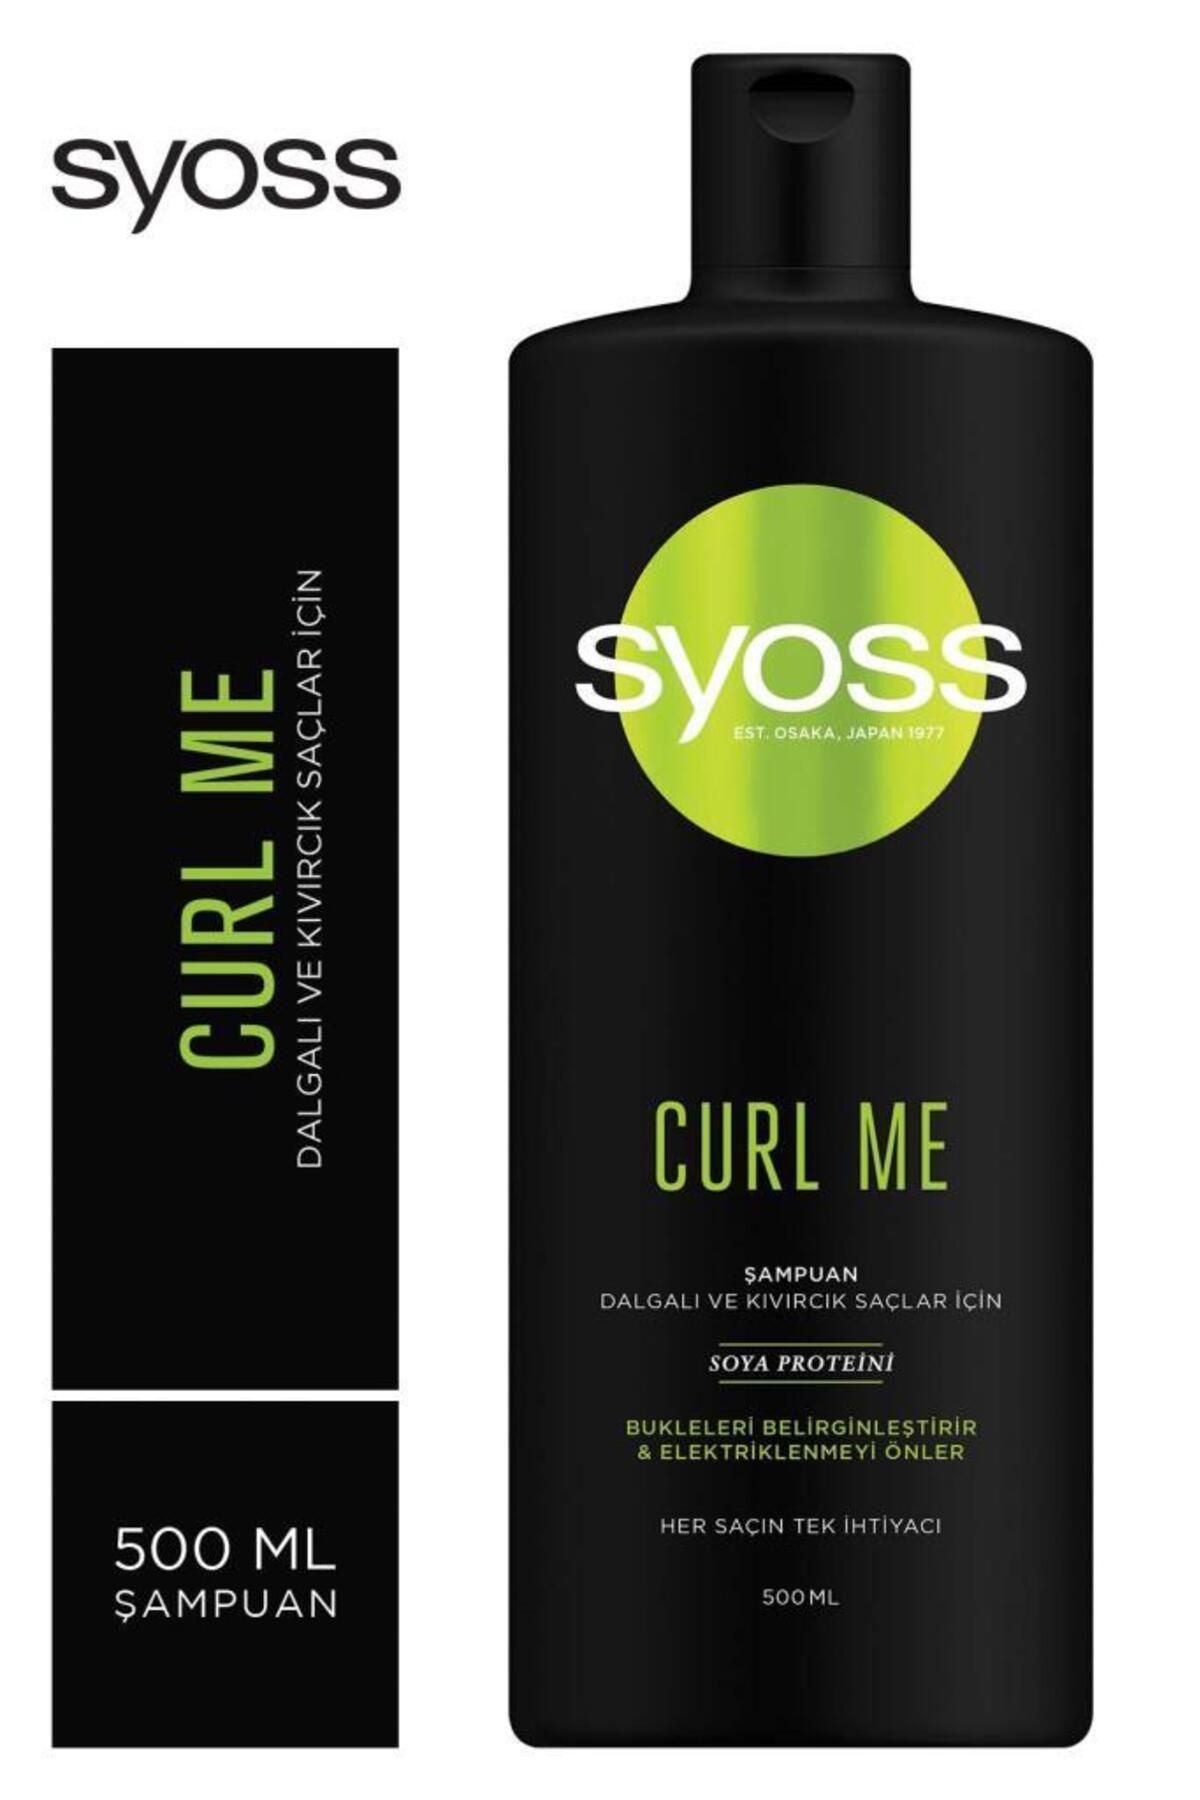 Syoss Curl Me Bukle Belirginleştirici Şampuan 500 ml